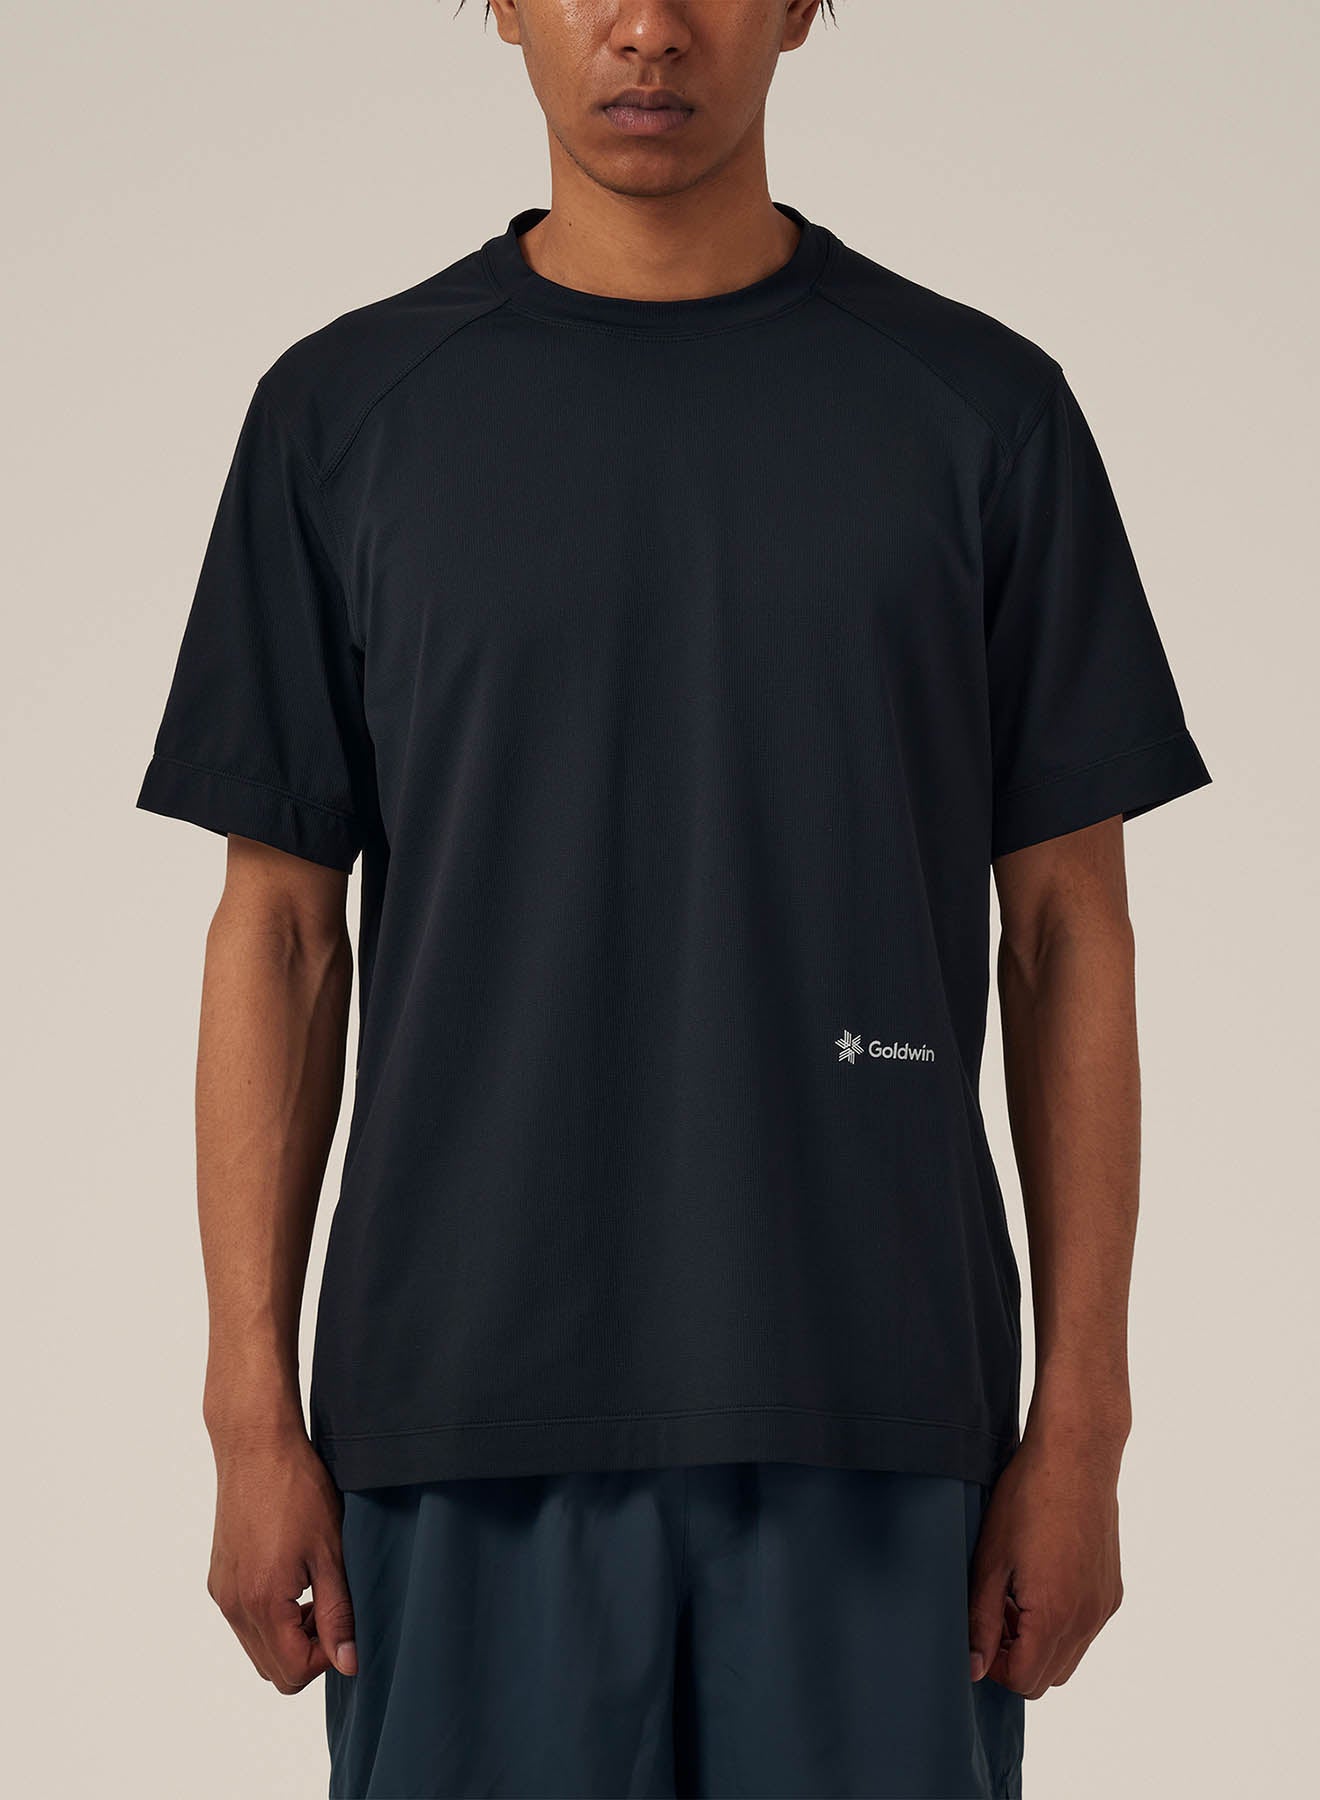 WF Dry T-shirts(Men's)